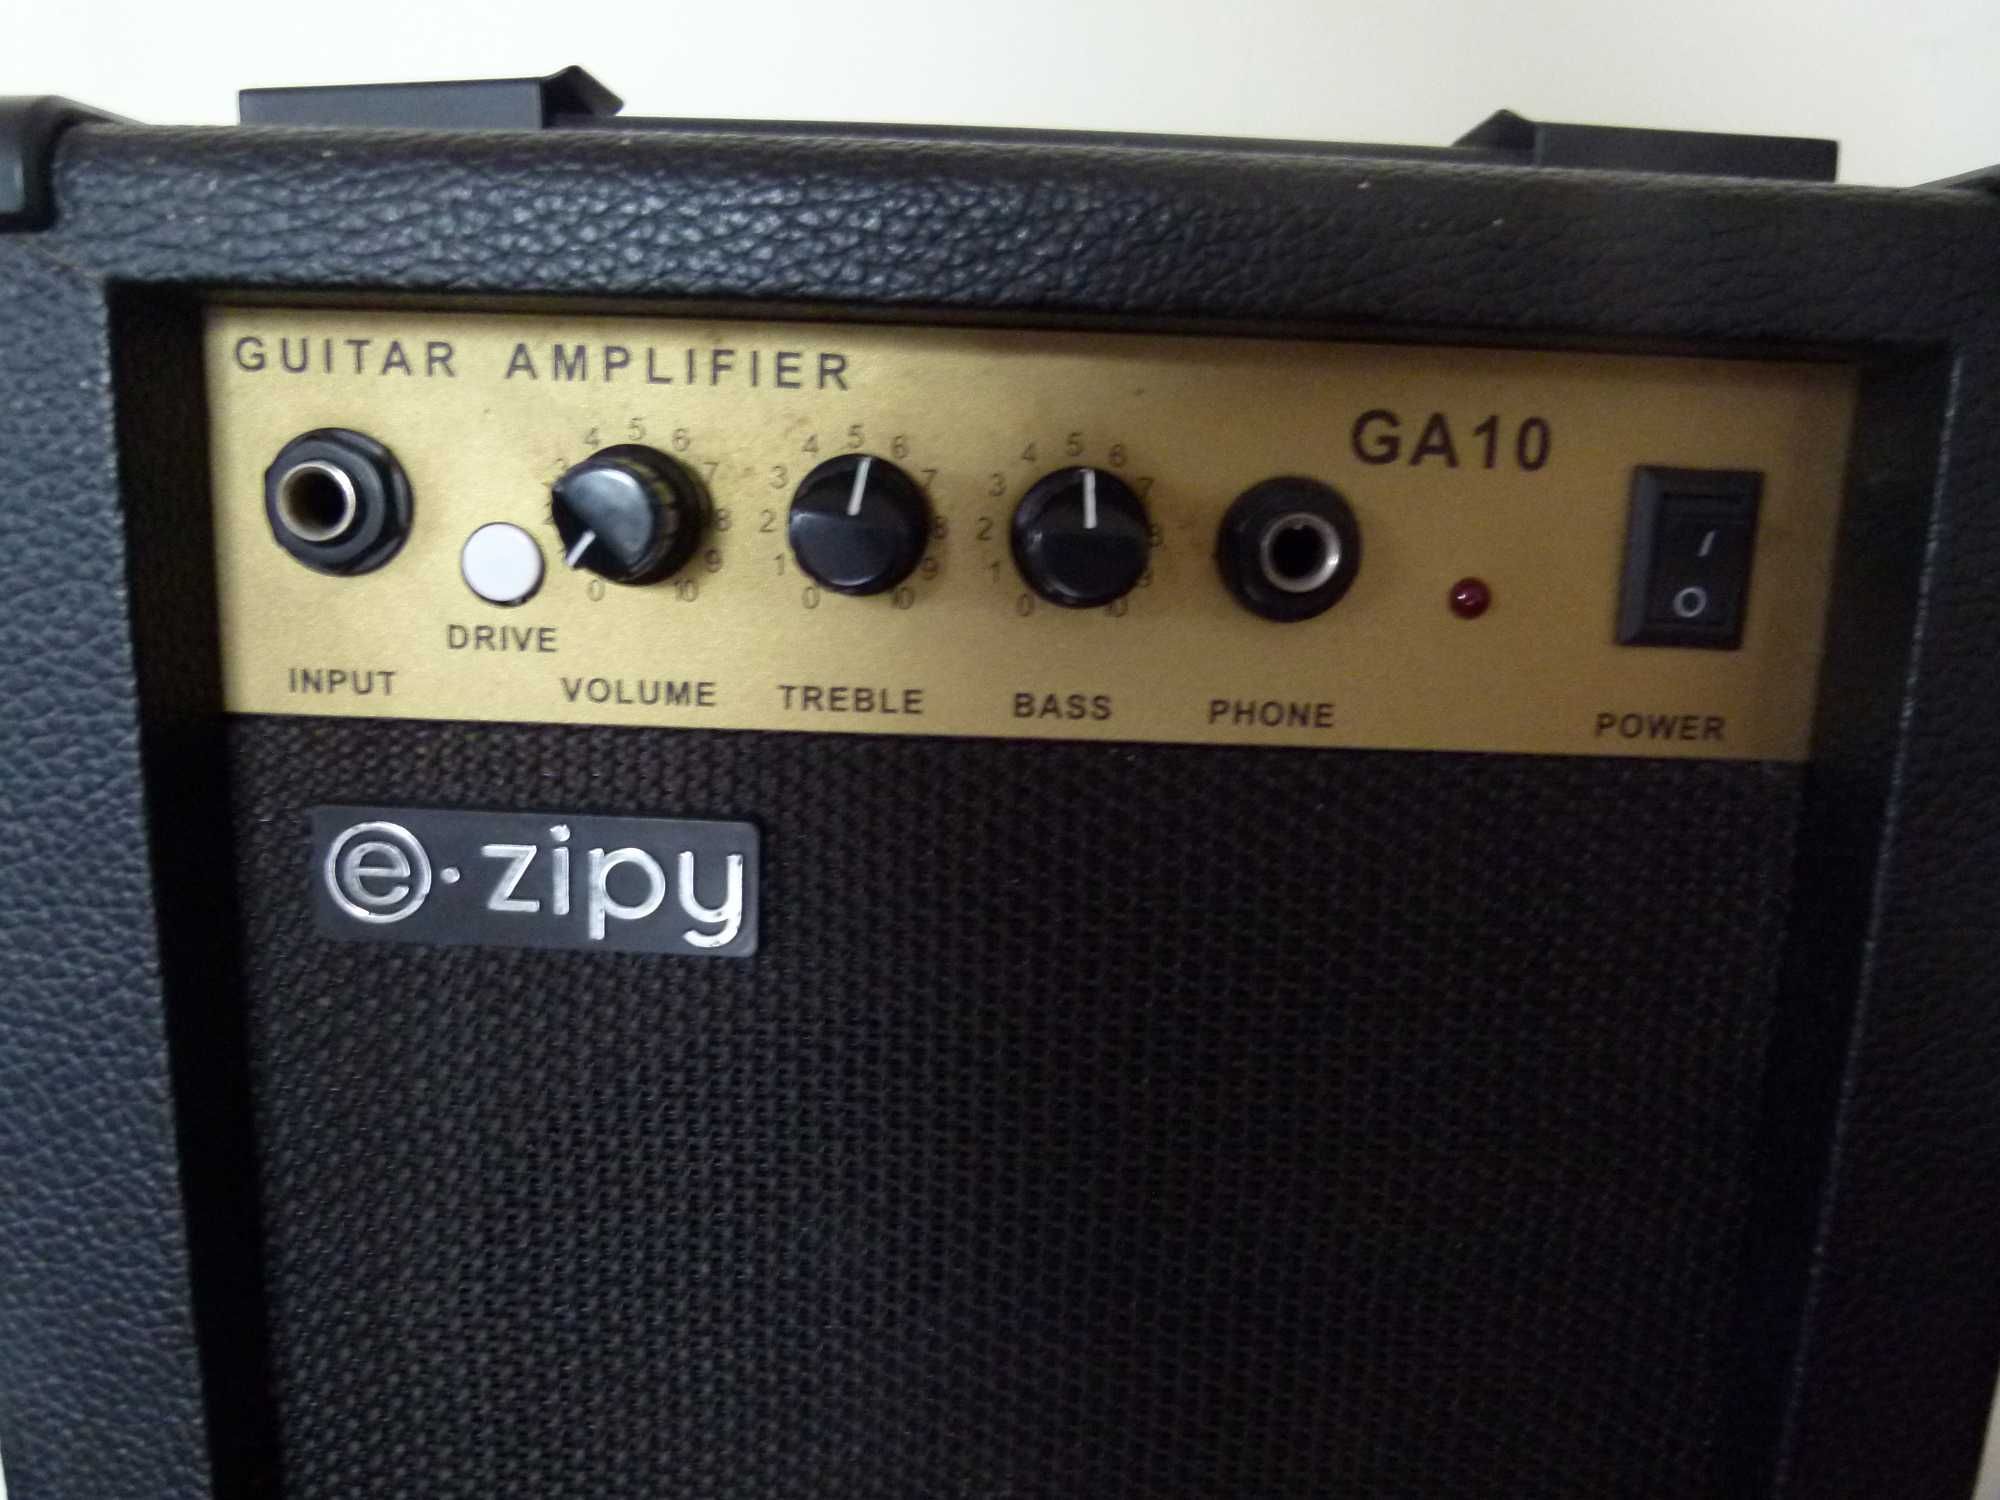 Amplificador GA10 ZIPY com microphone